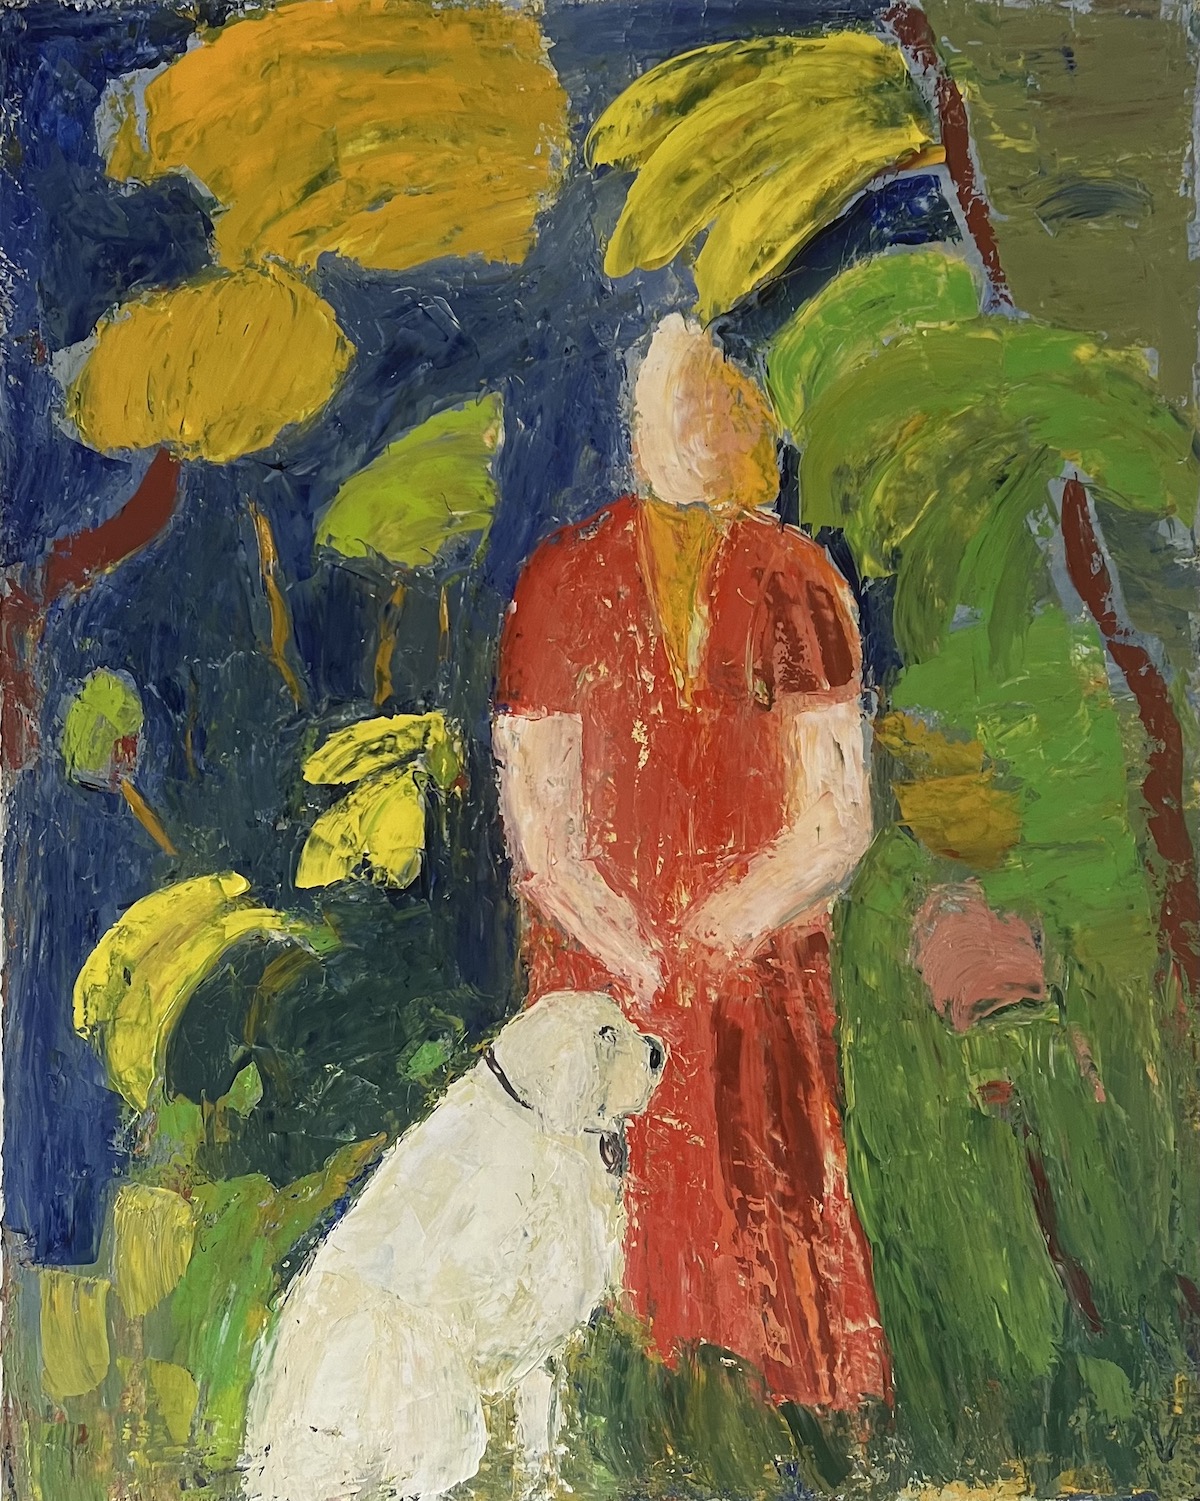 Ingrid Villesen. “Kone og hund”. Olie på lærred / Oil on canvas. 100 x 80 cm.